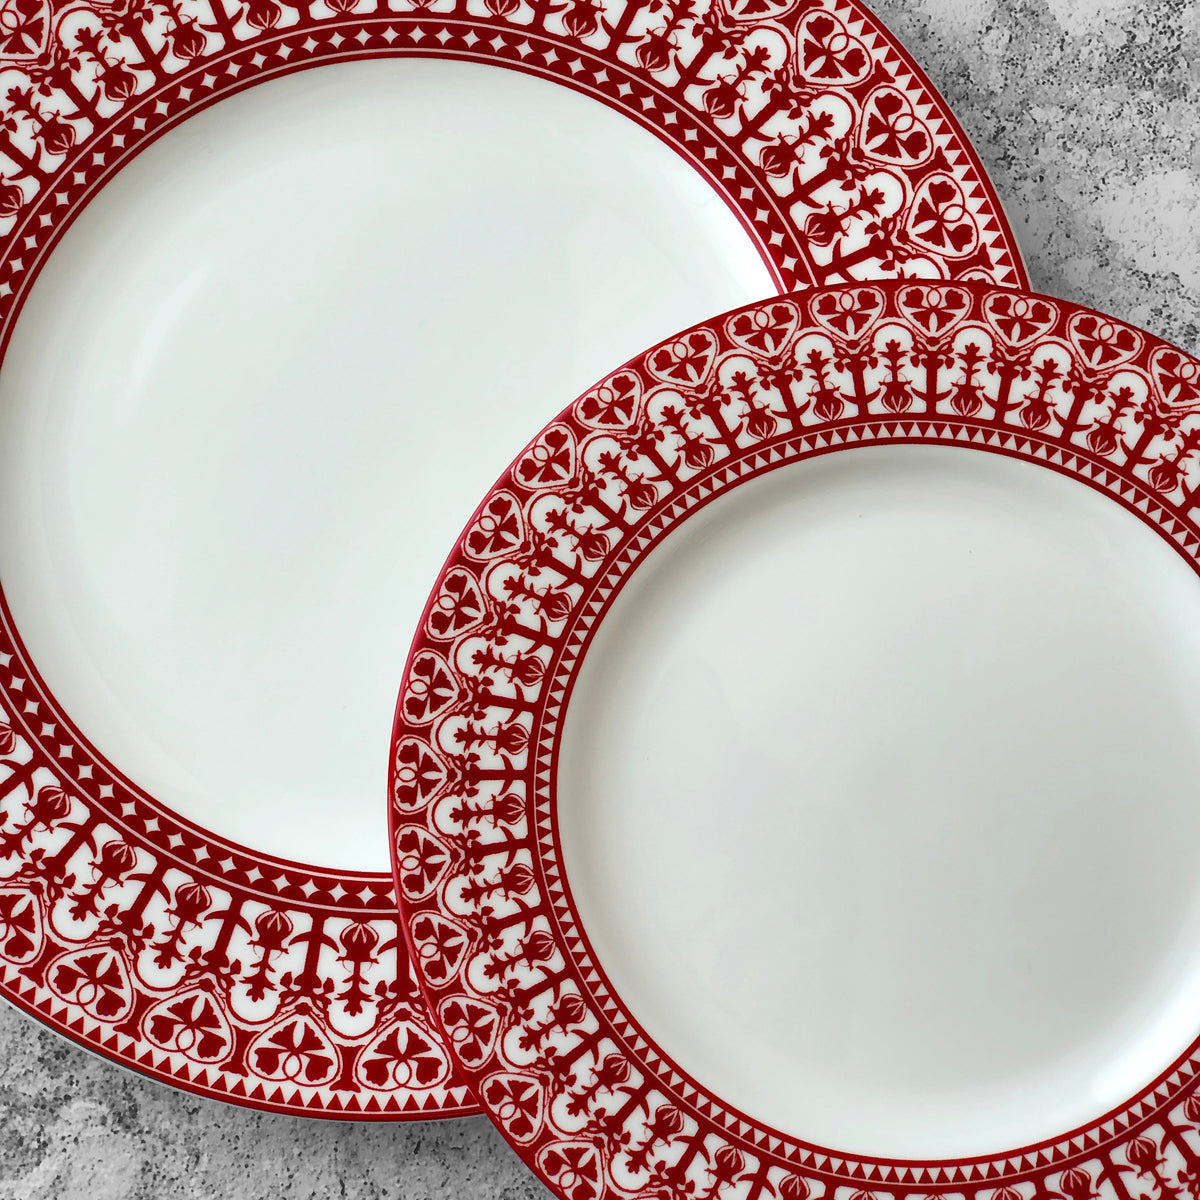 Two Casablanca Crimson Rimmed Dinner Plates by Caskata Artisanal Home on a concrete surface.